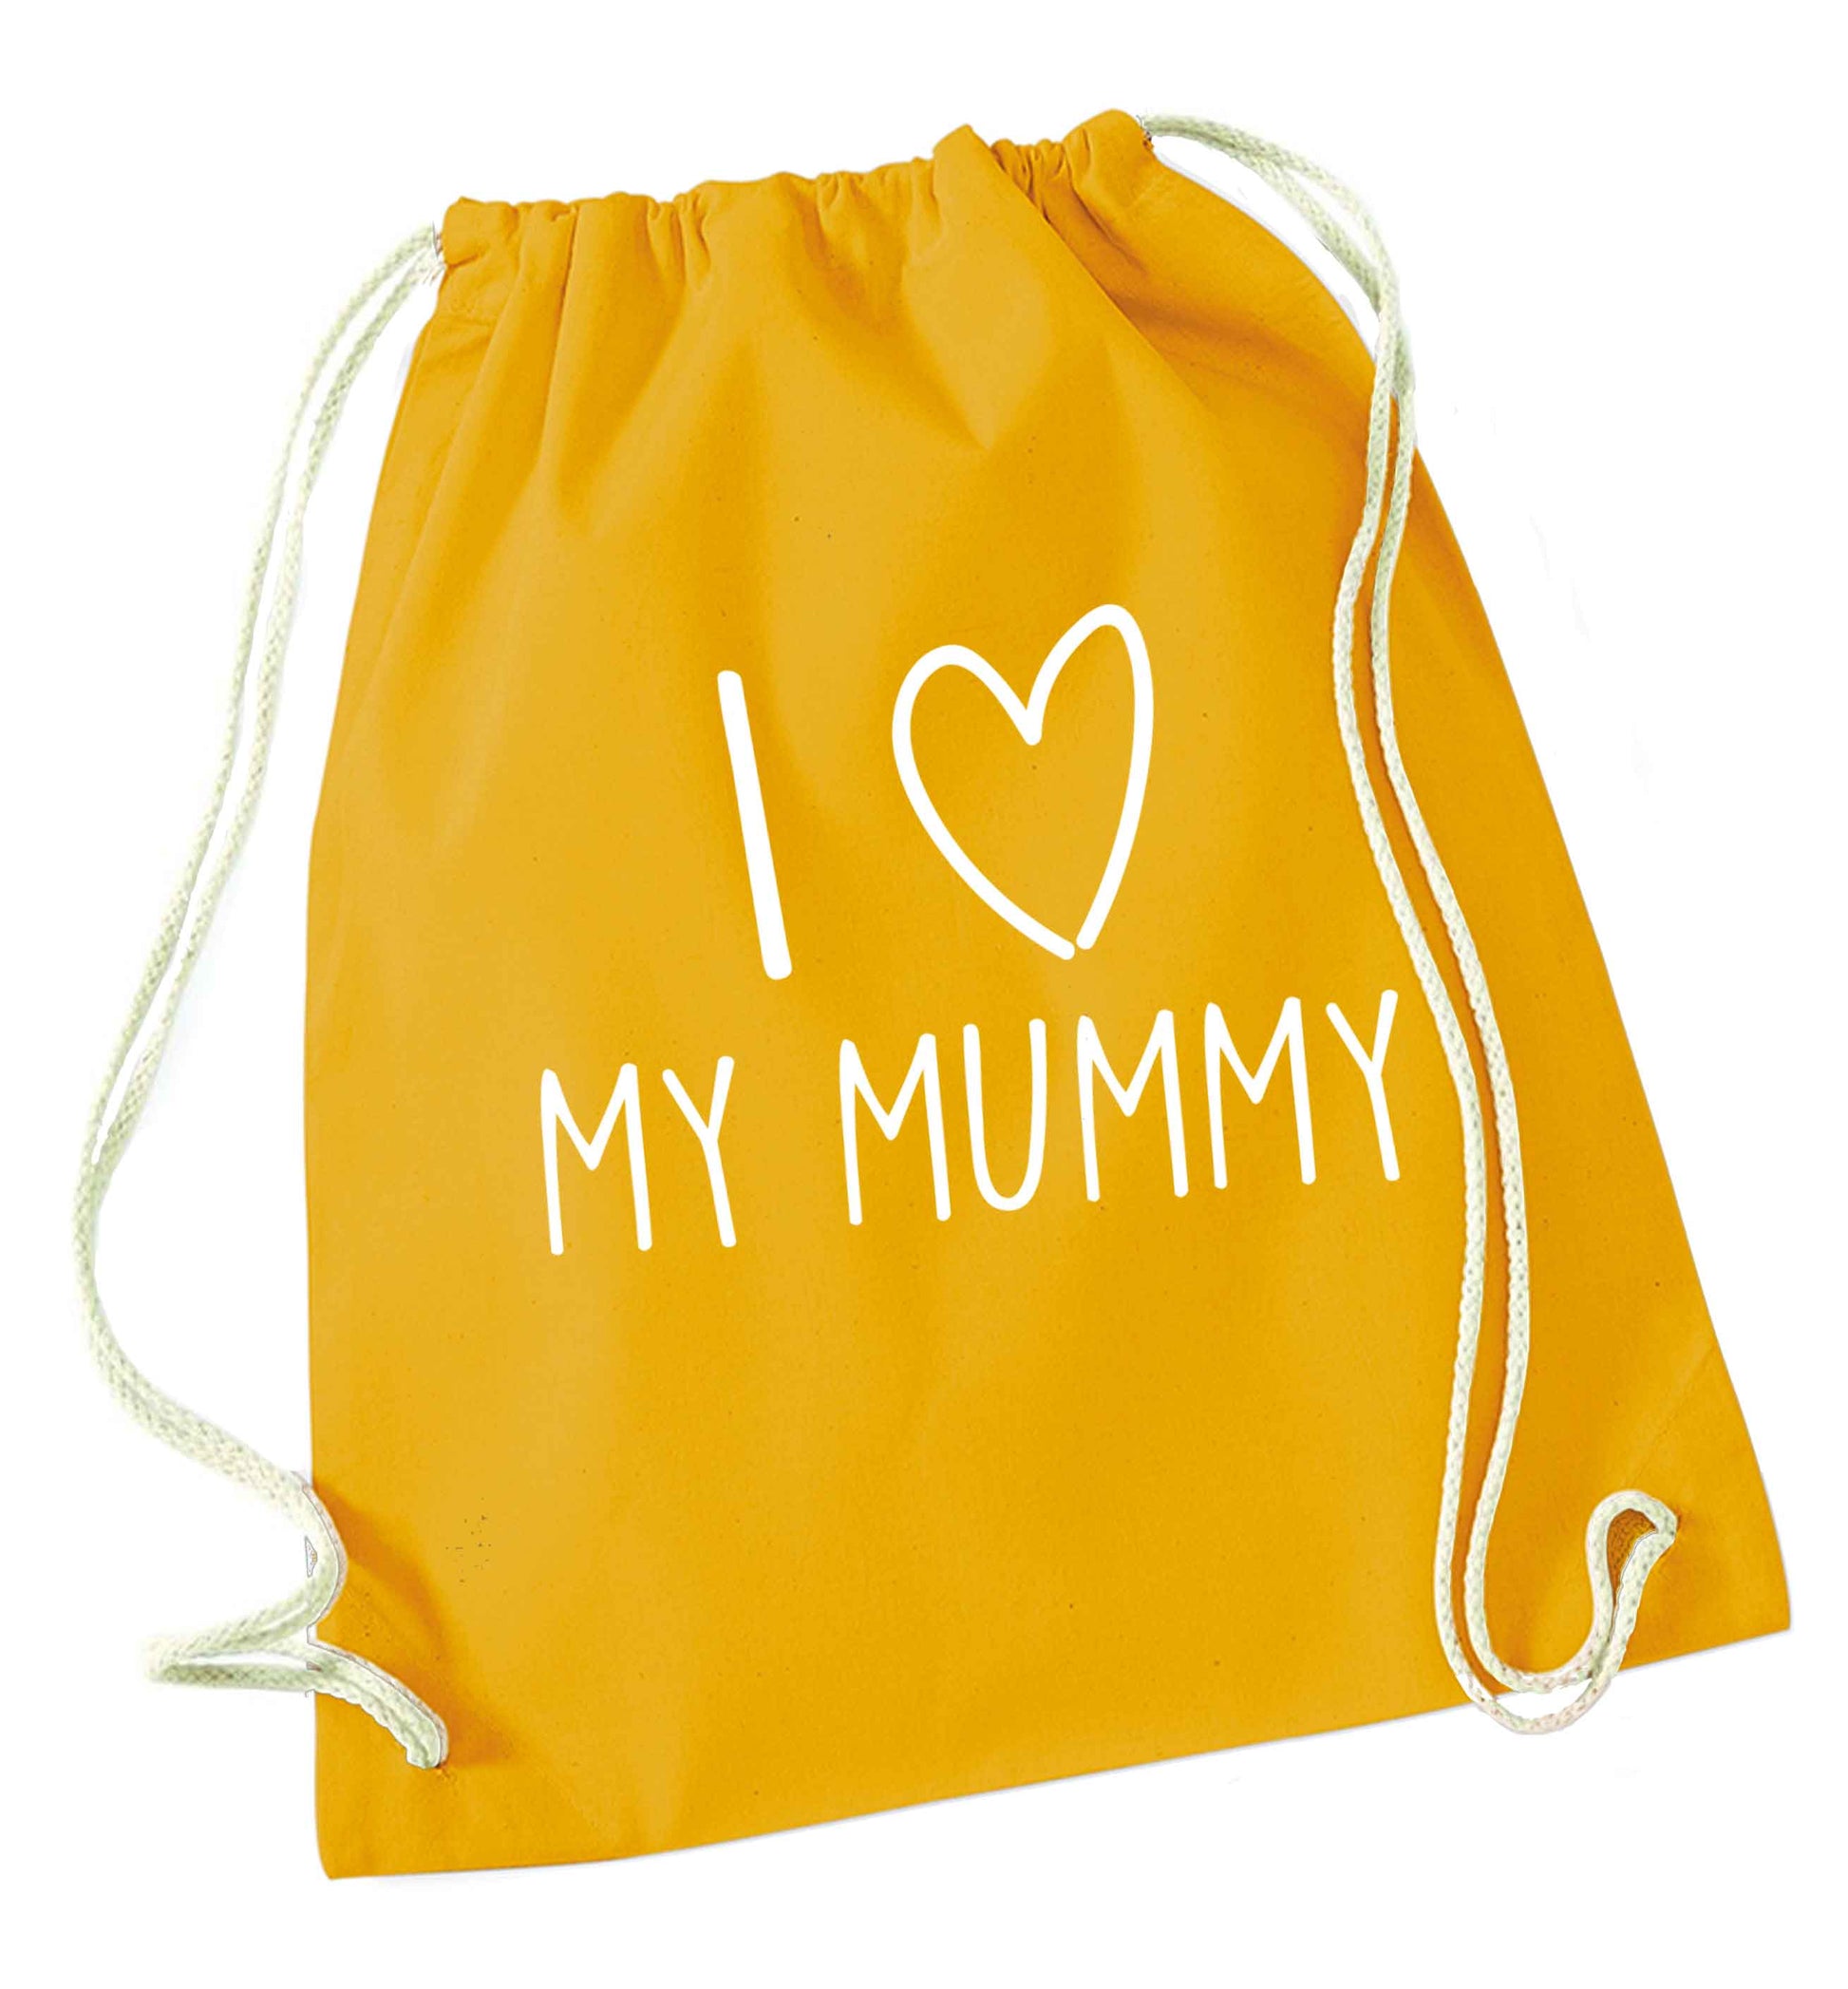 I love my mummy mustard drawstring bag